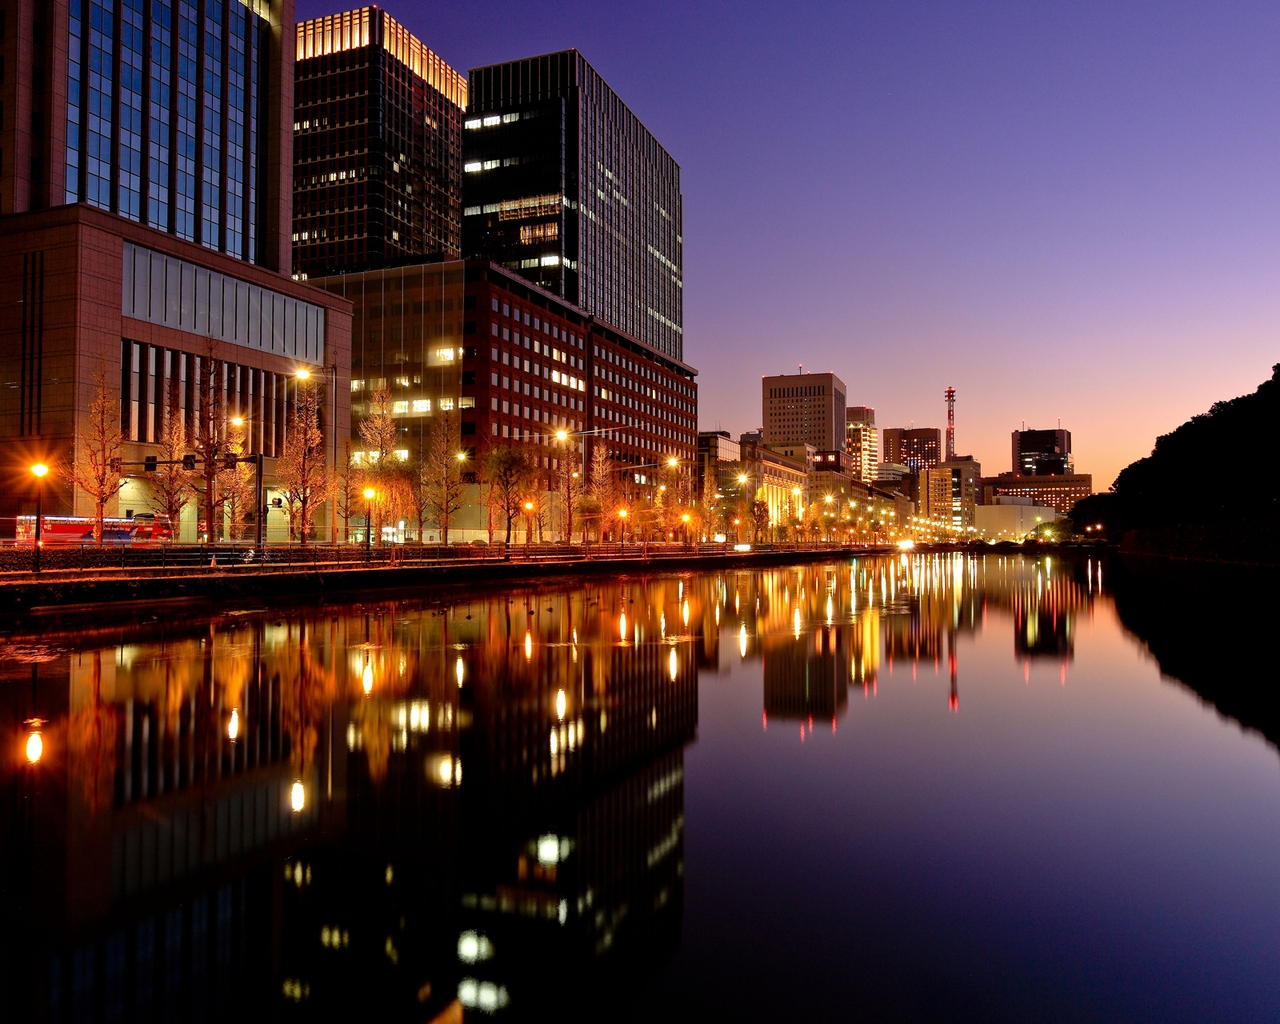 Tokyo City Lights for 1280 x 1024 resolution